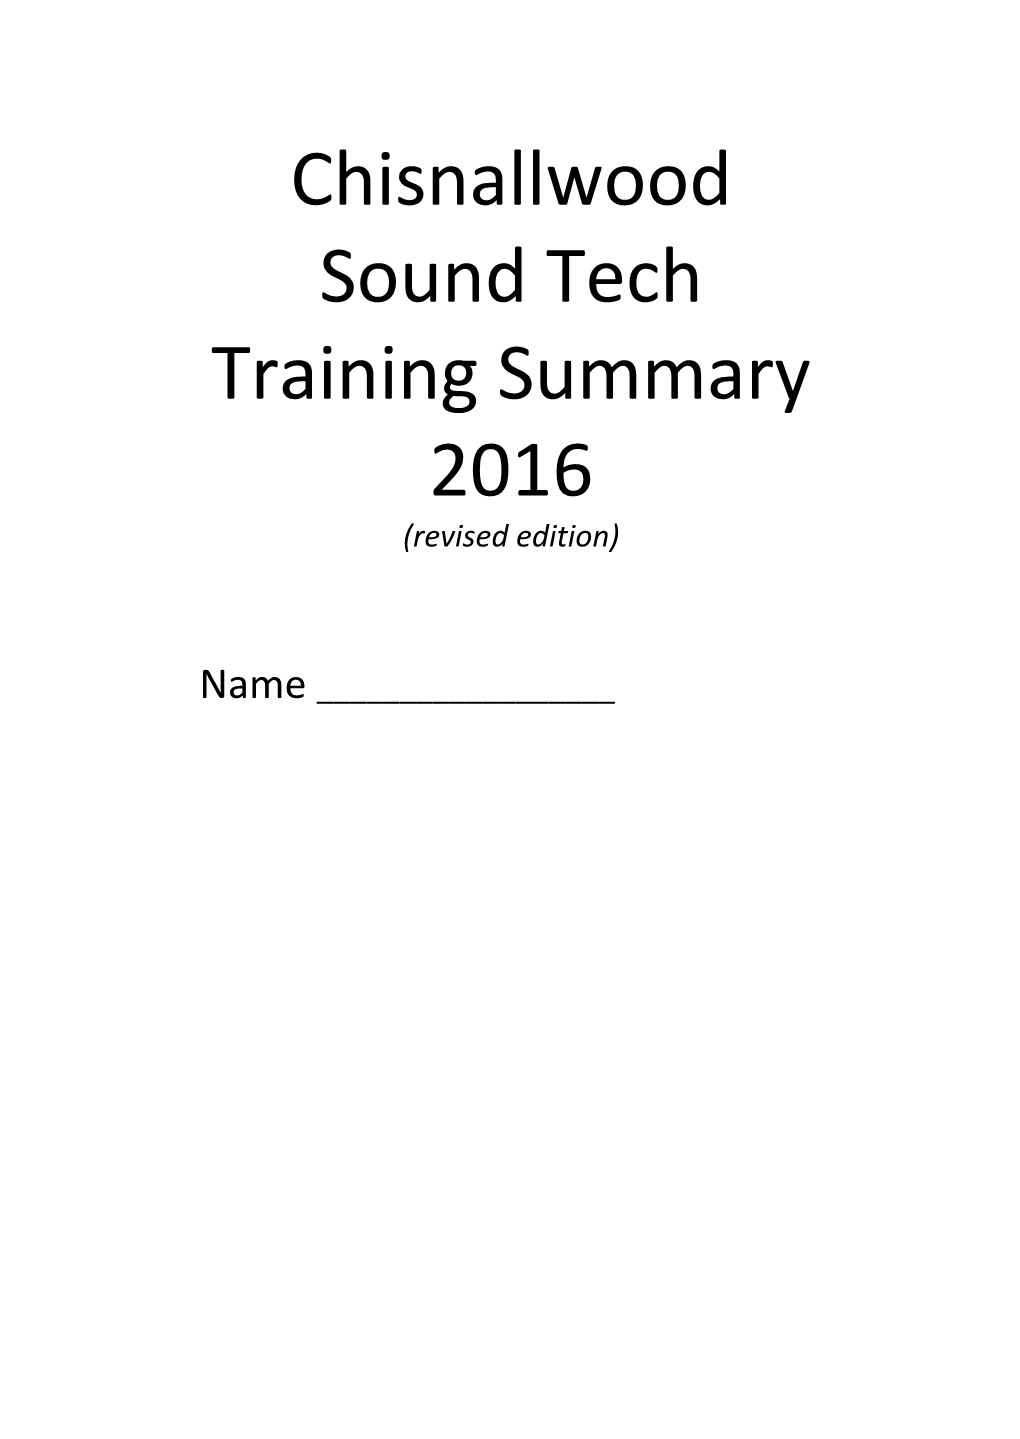 Chisnallwood Sound Tech Training Summary 2016 (Revised Edition)